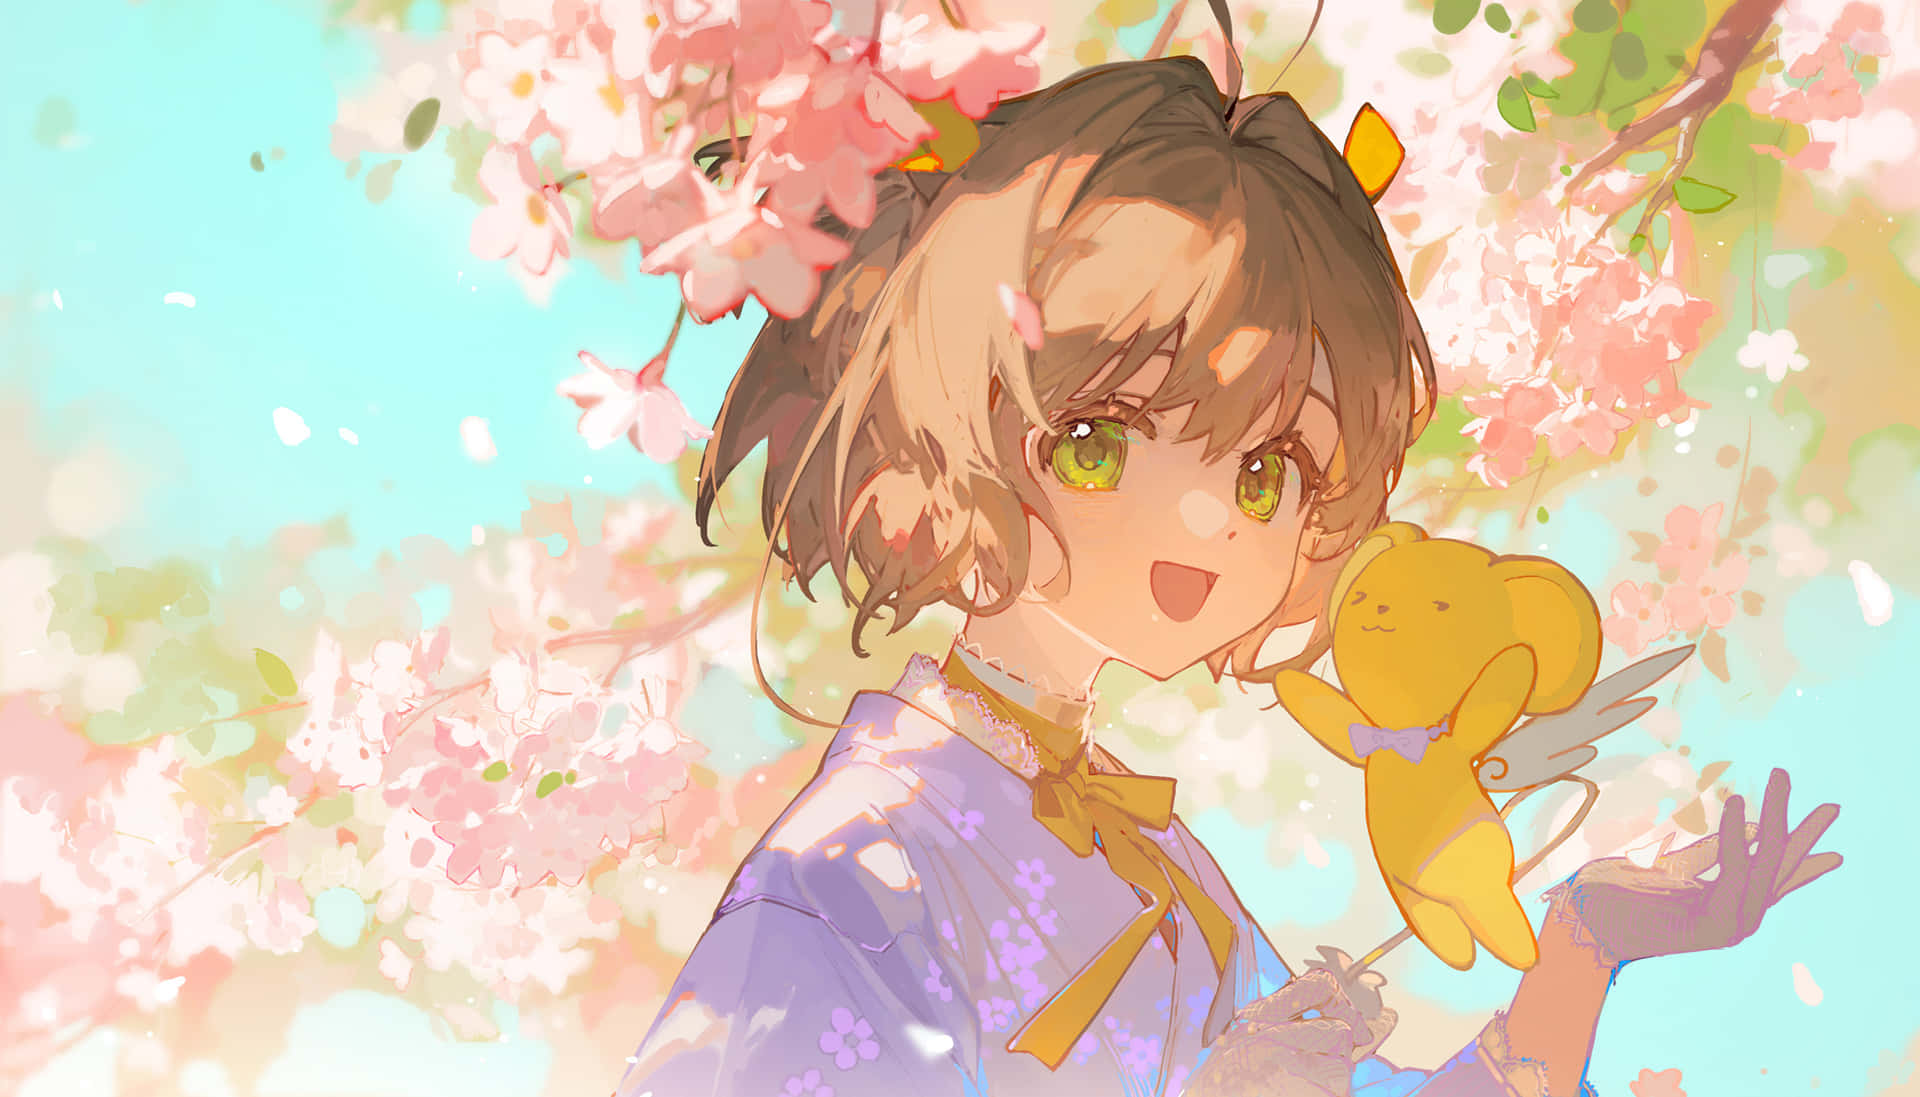 Sakura Background